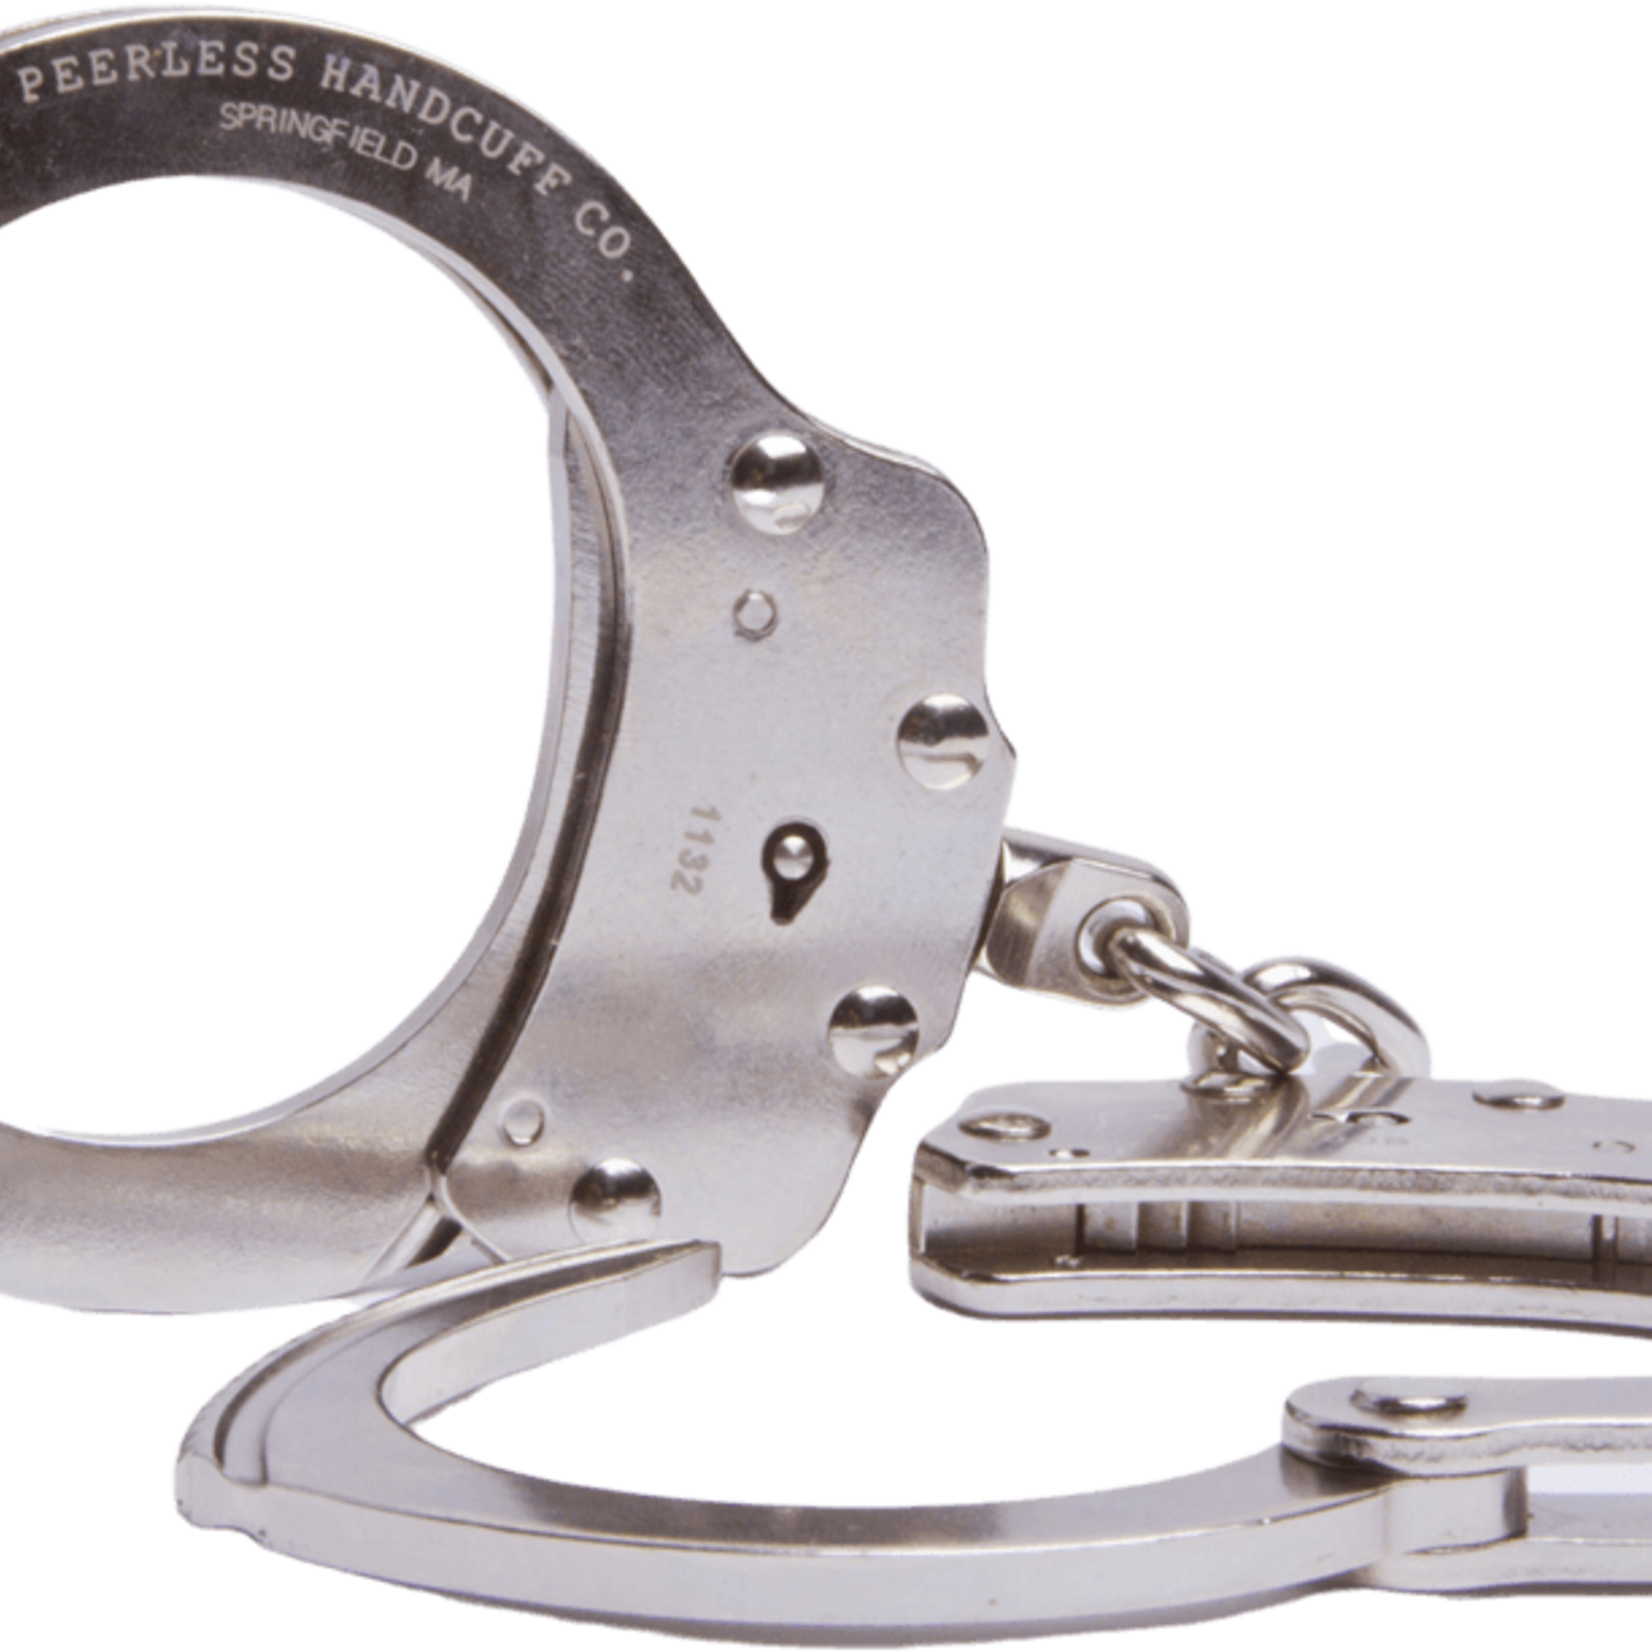 Peerless HandCuff Company 700C Model 700C Chain Link Handcuffs - Nickel Finish